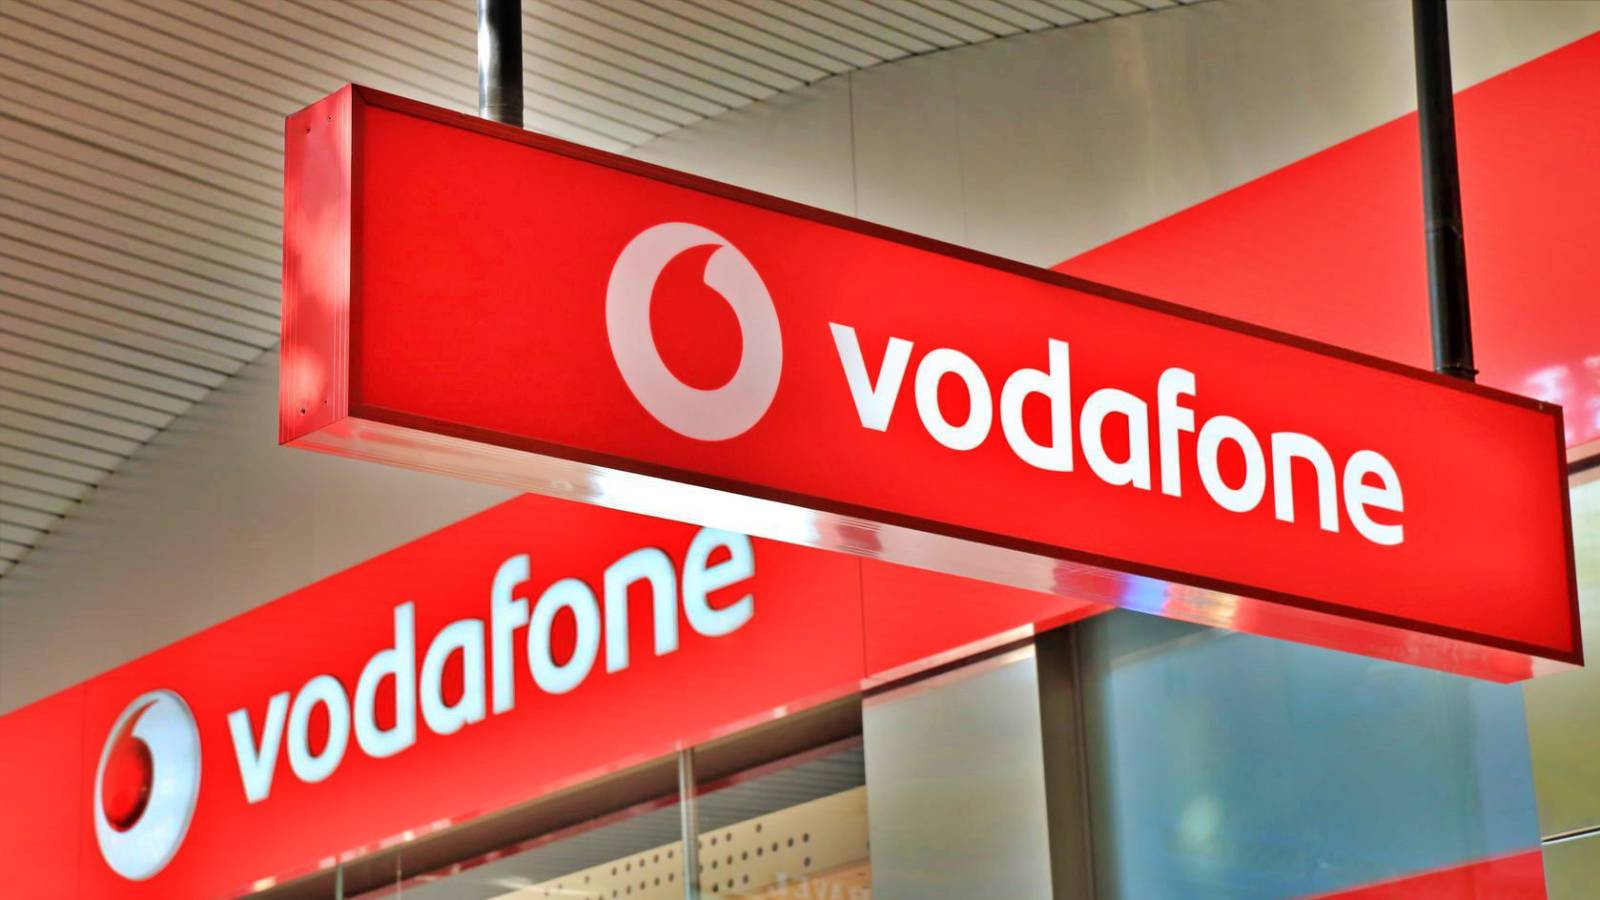 Vodafone Customer Notification offre rumeni GRATIS